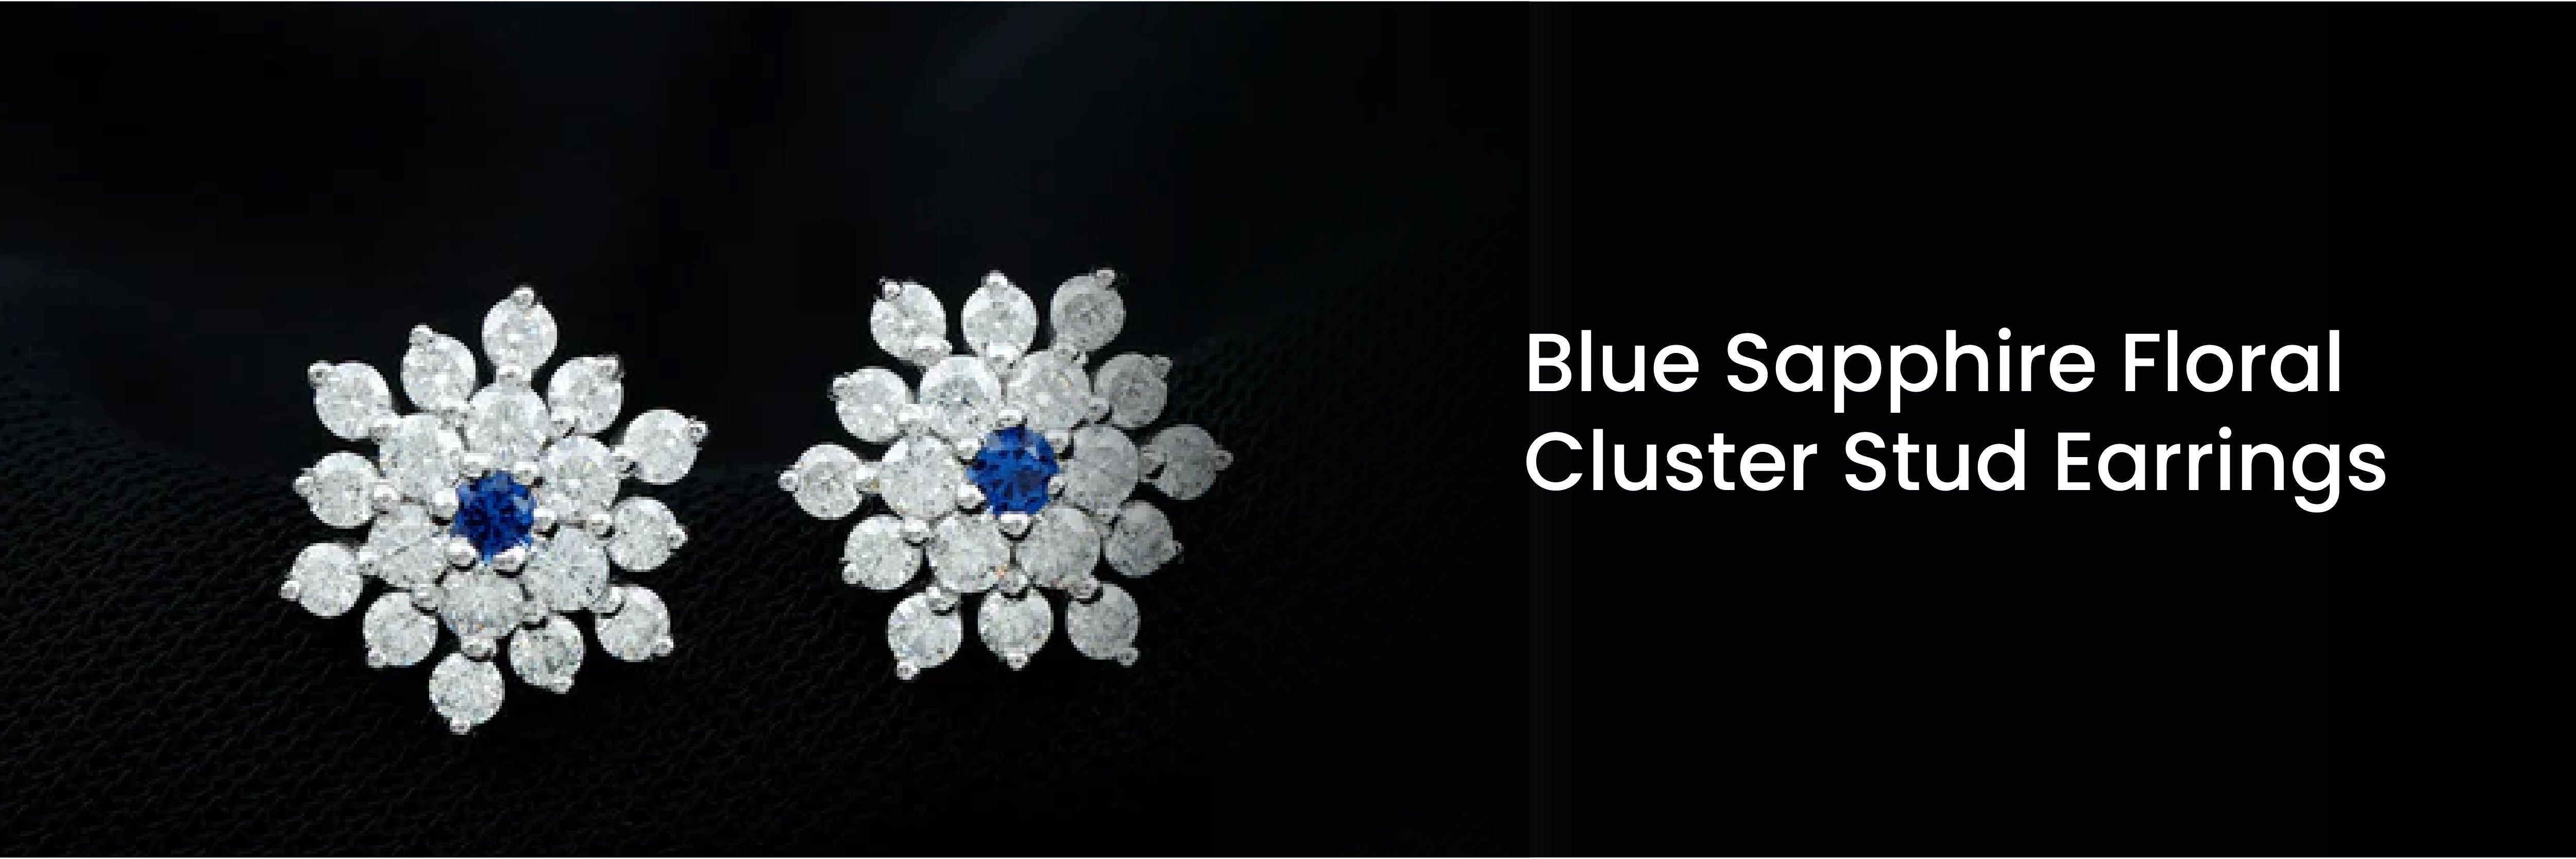 Blue Sapphire Floral Cluster Stud Earrings